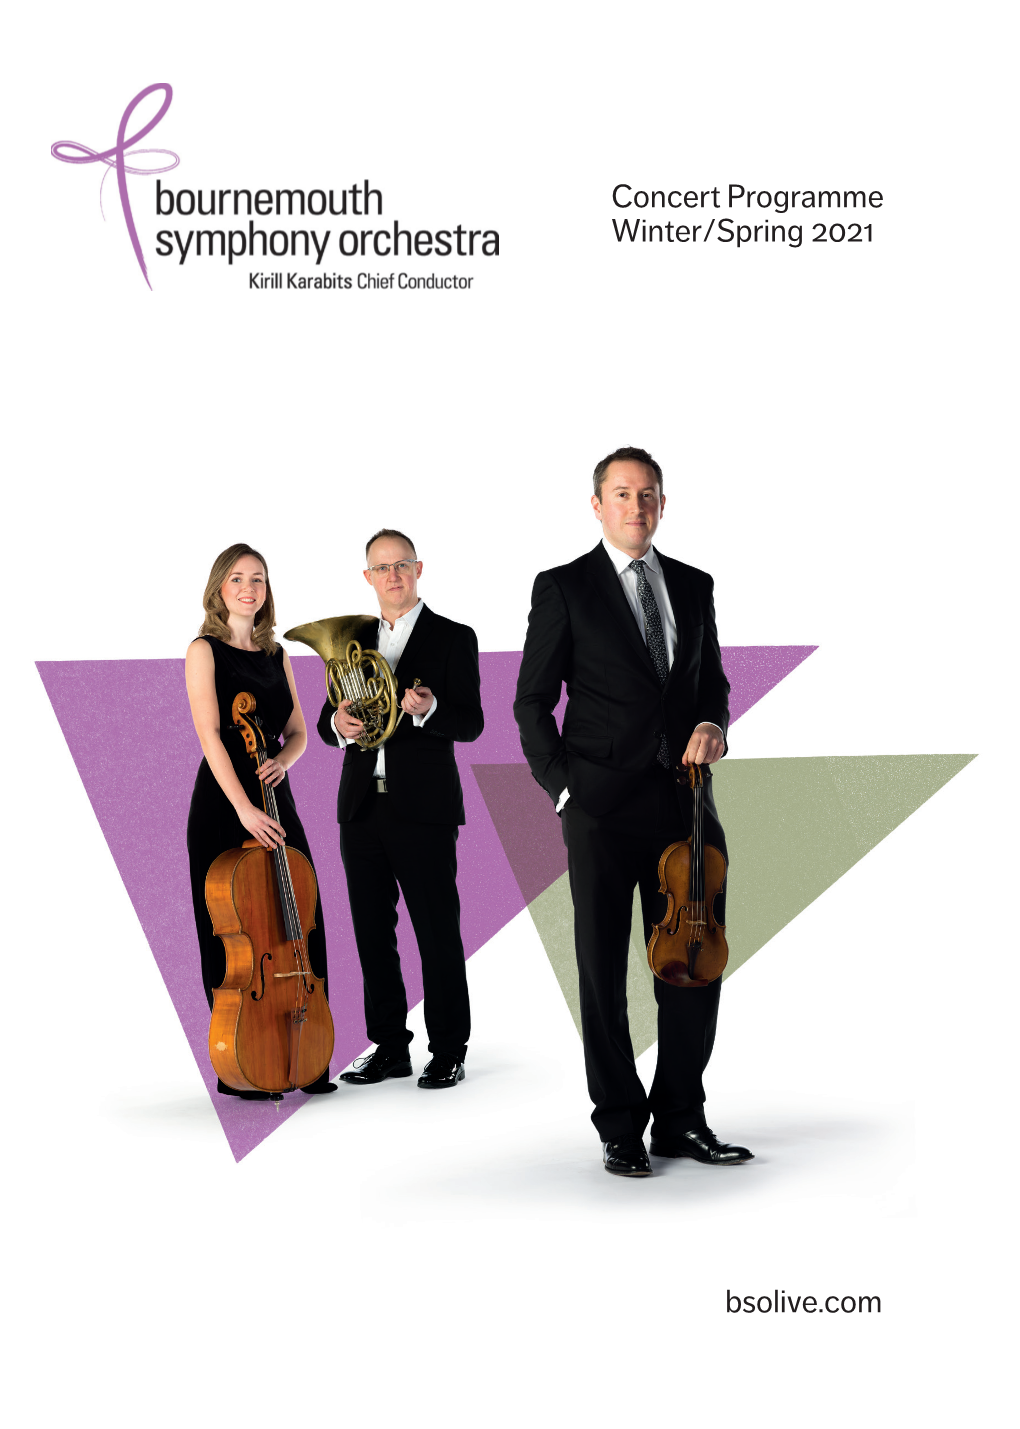 Concert Programme Winter/Spring 2021